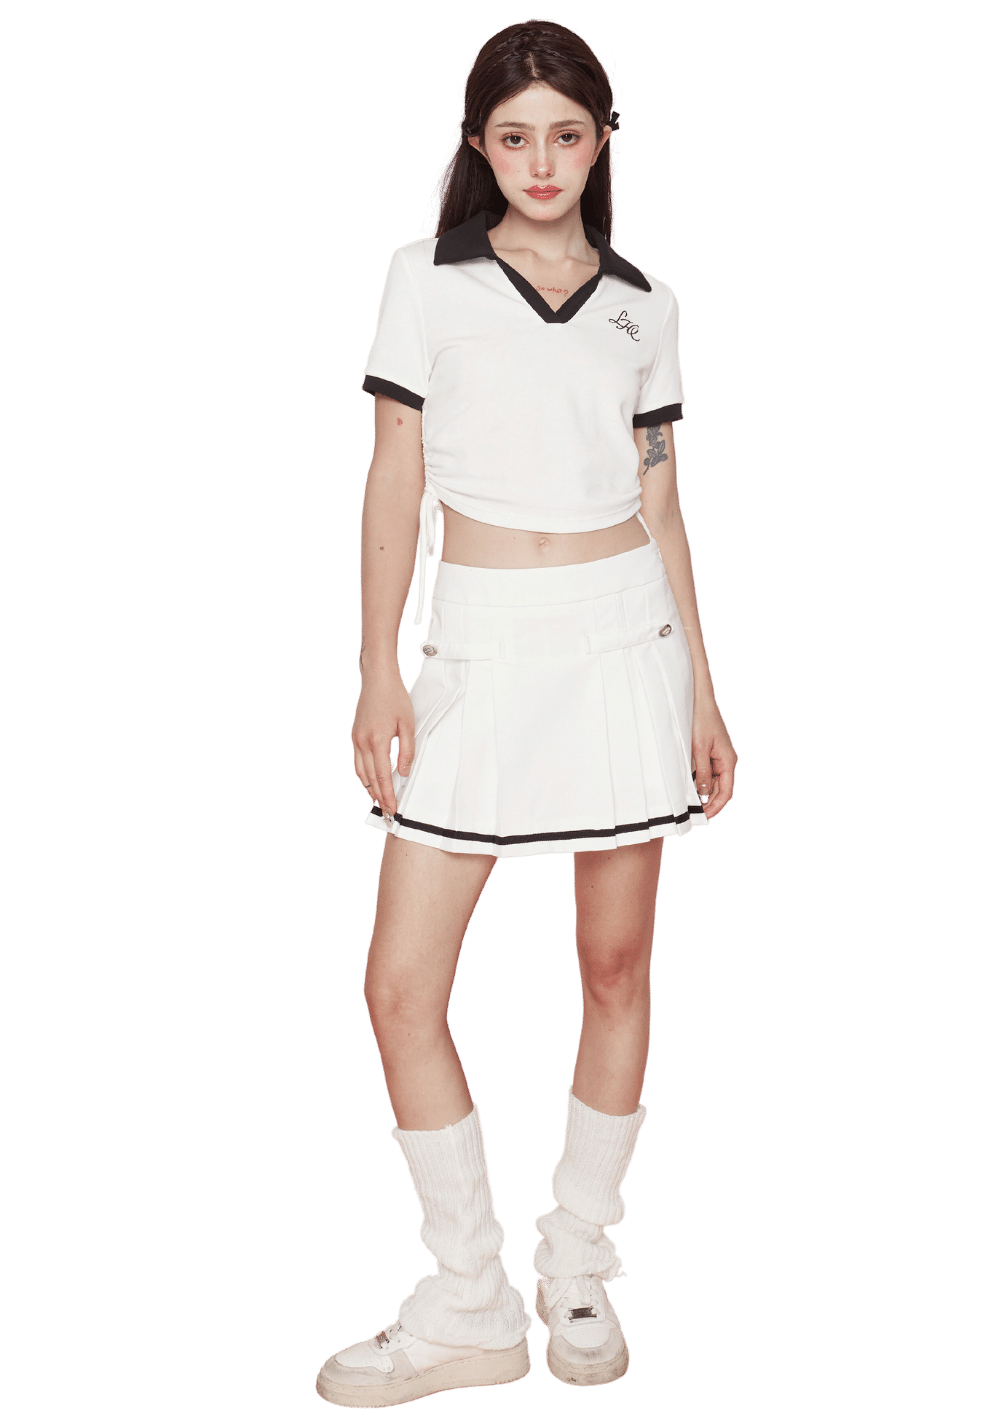 Tennis Skirt - PSYLOS 1, Tennis Skirt, skirt, LHC MODA, PSYLOS 1